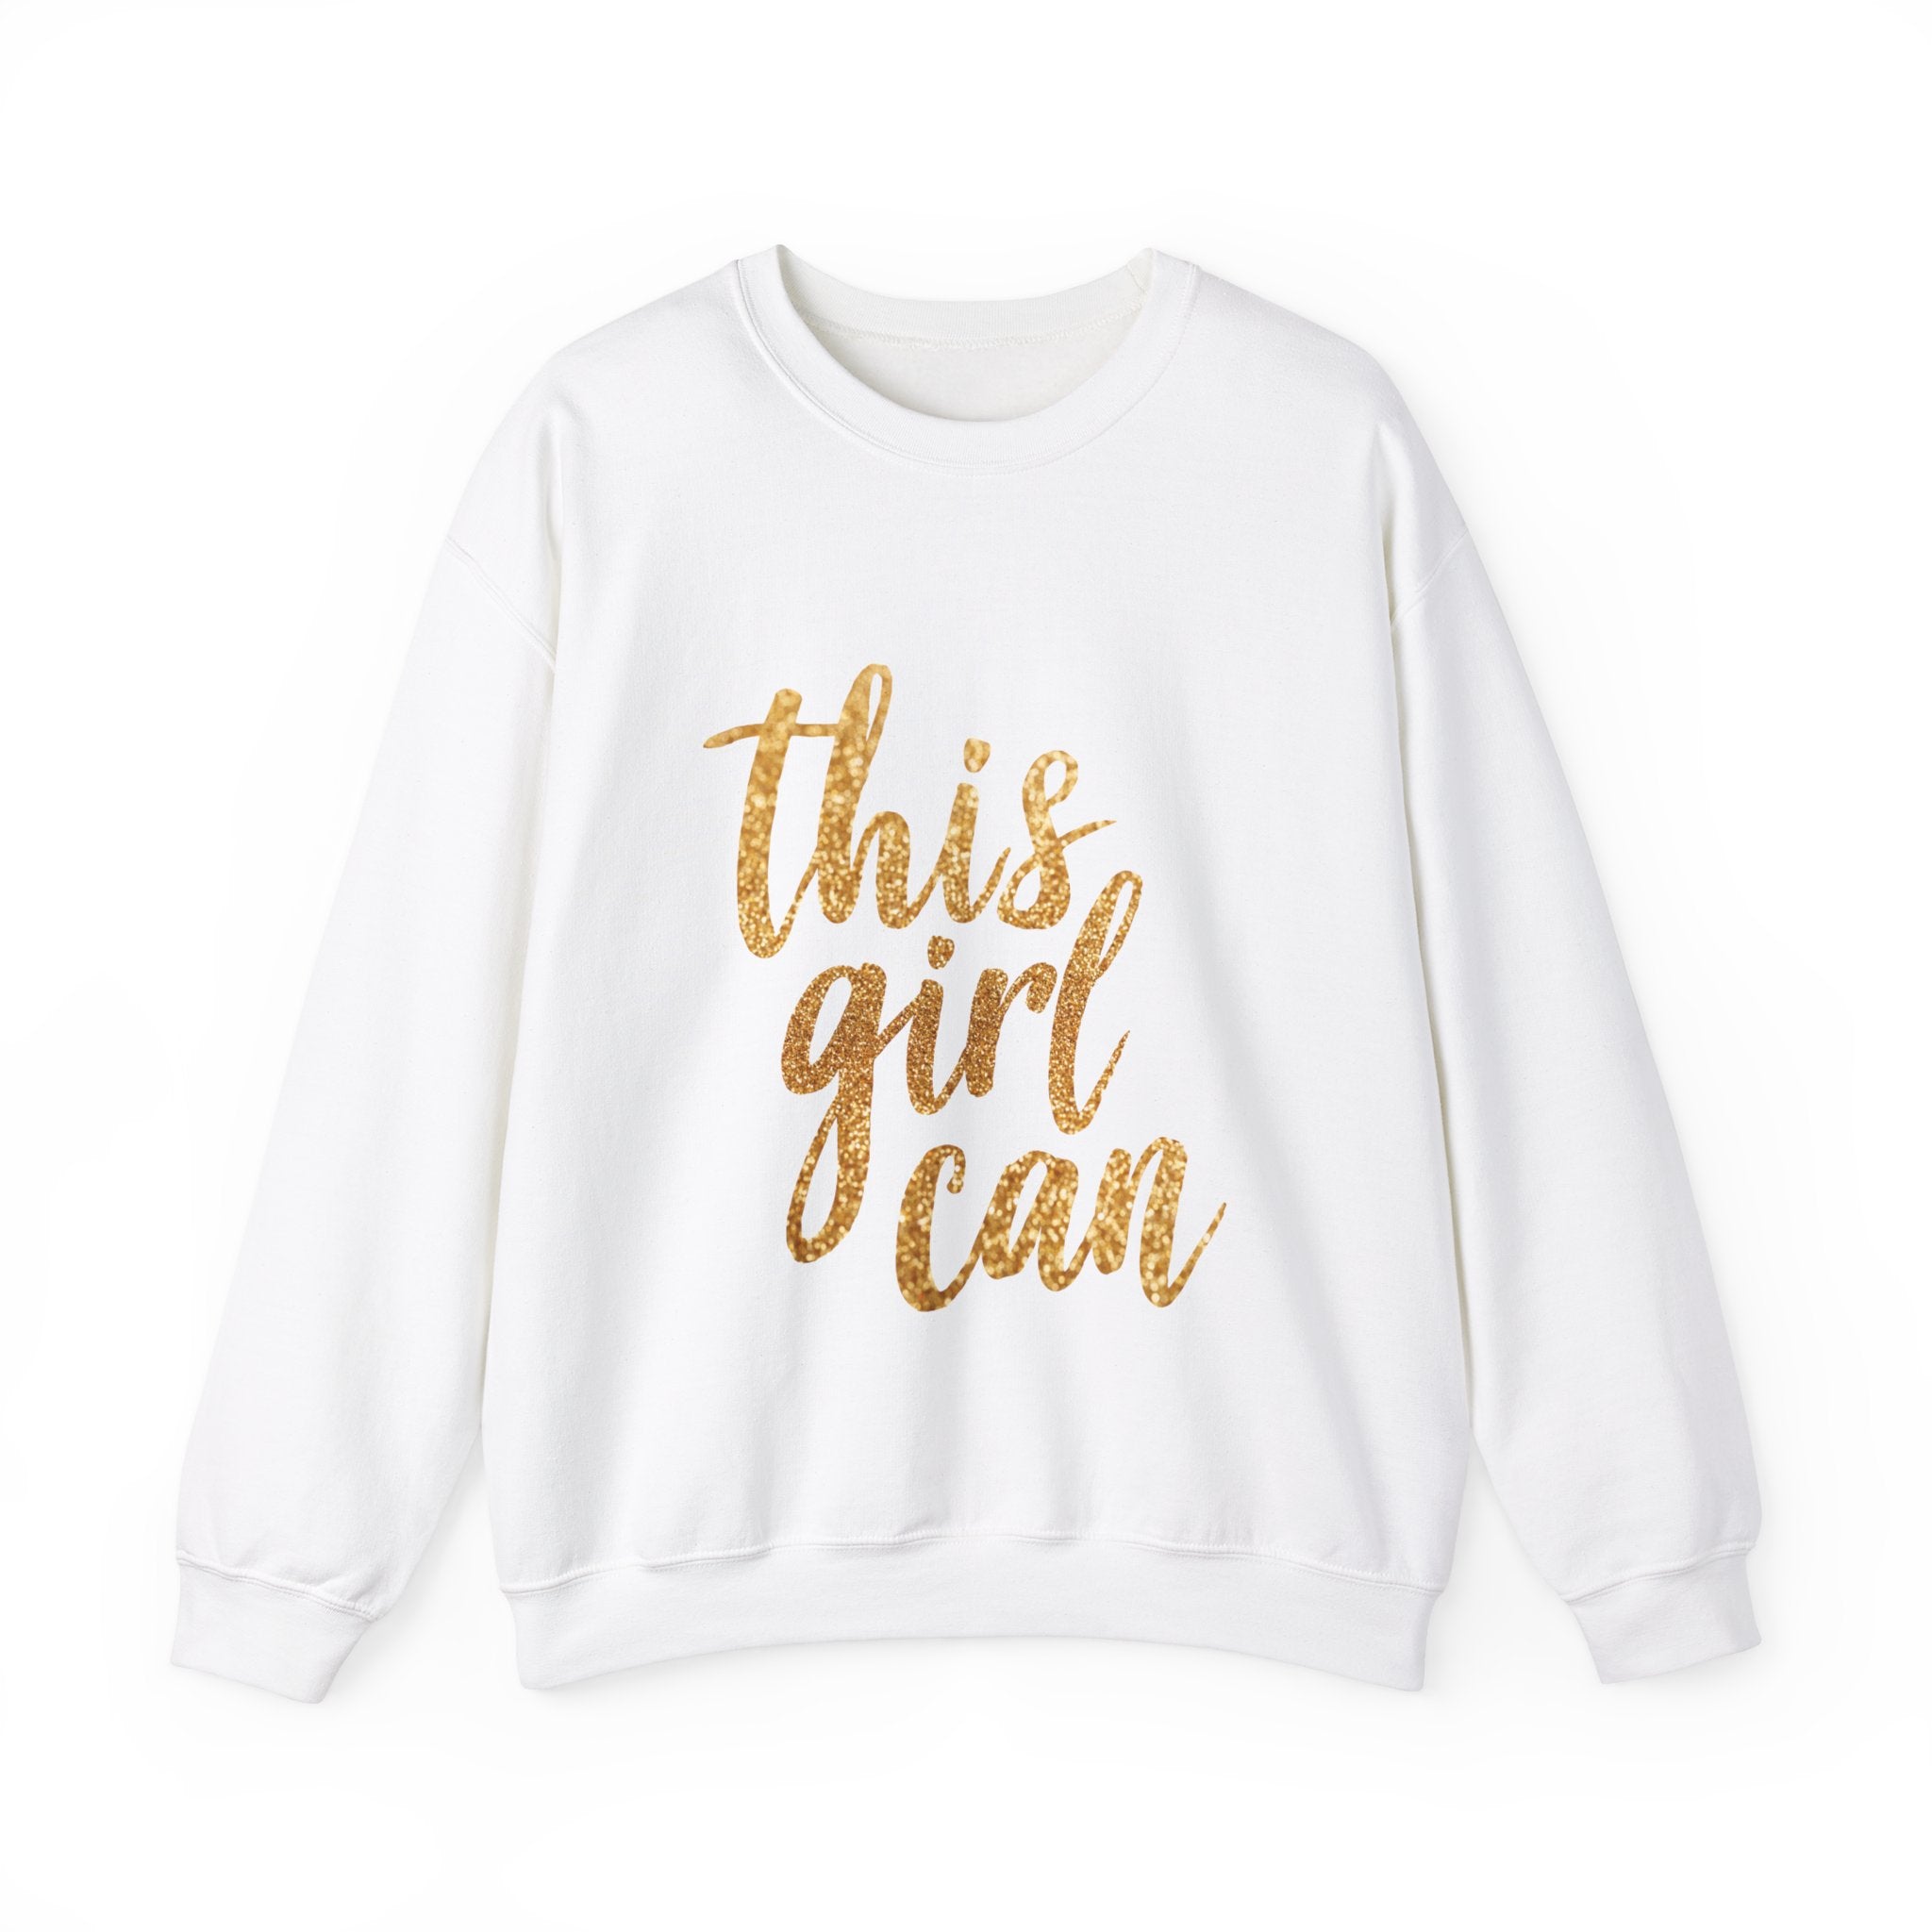 This Girl Can -  Sweatshirt